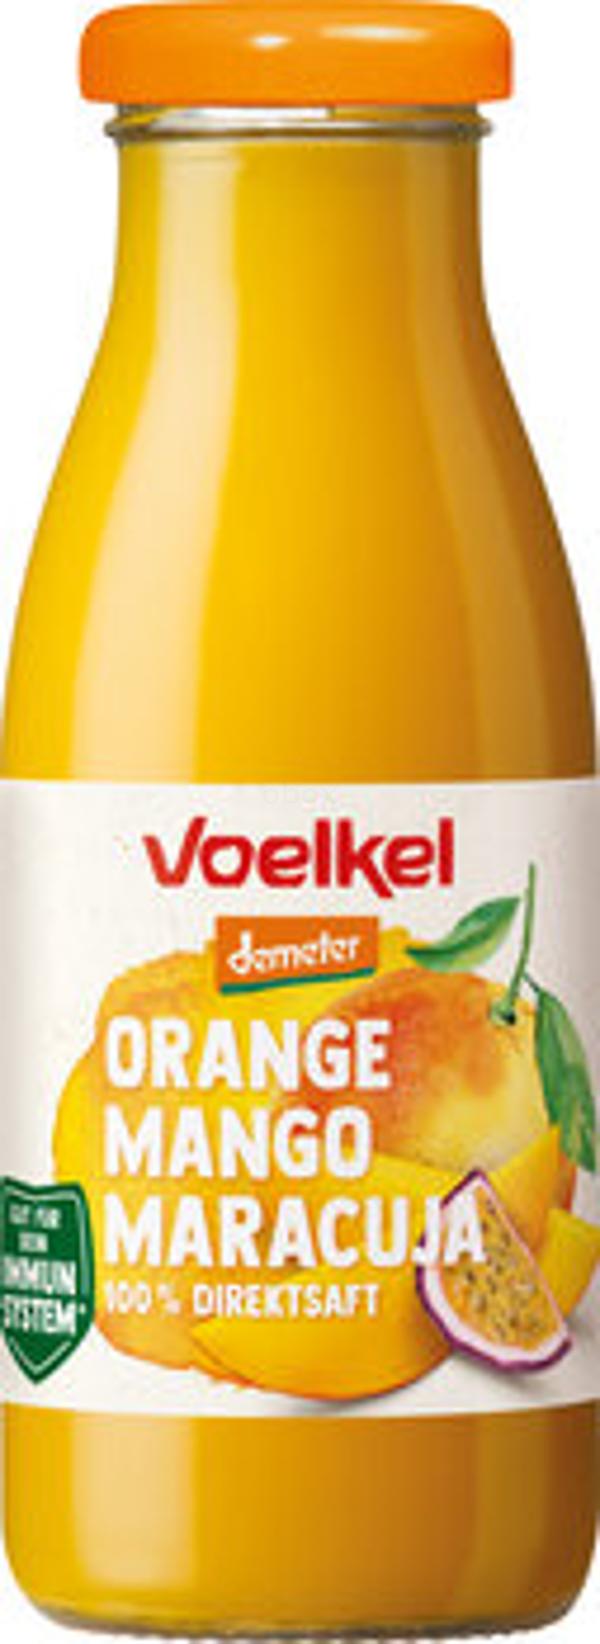 Produktfoto zu Orange-Mango-Maracuja, 0,25 l